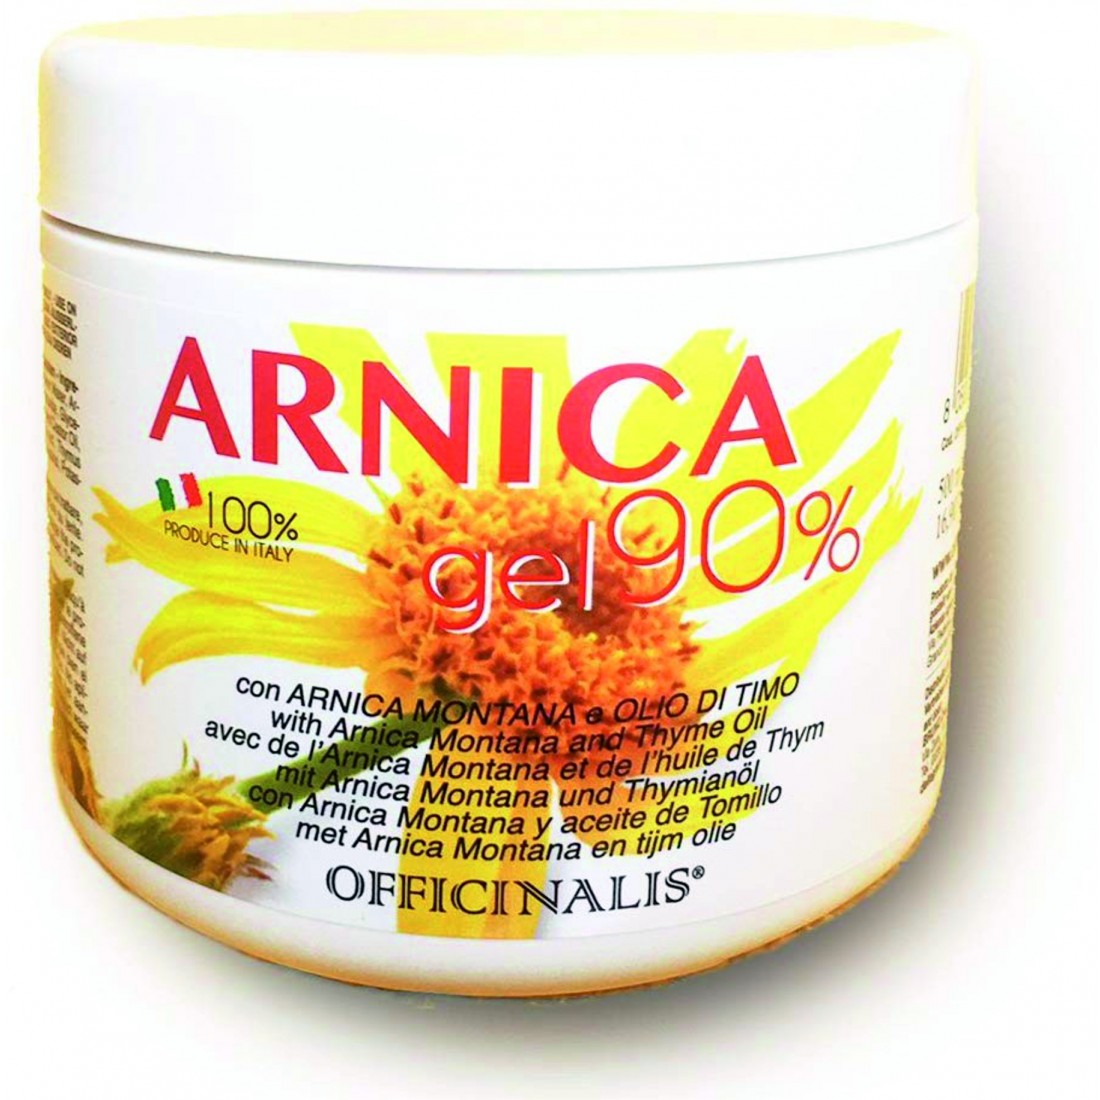 Arnica gel 90% officinalis dalla grana 500 ml.